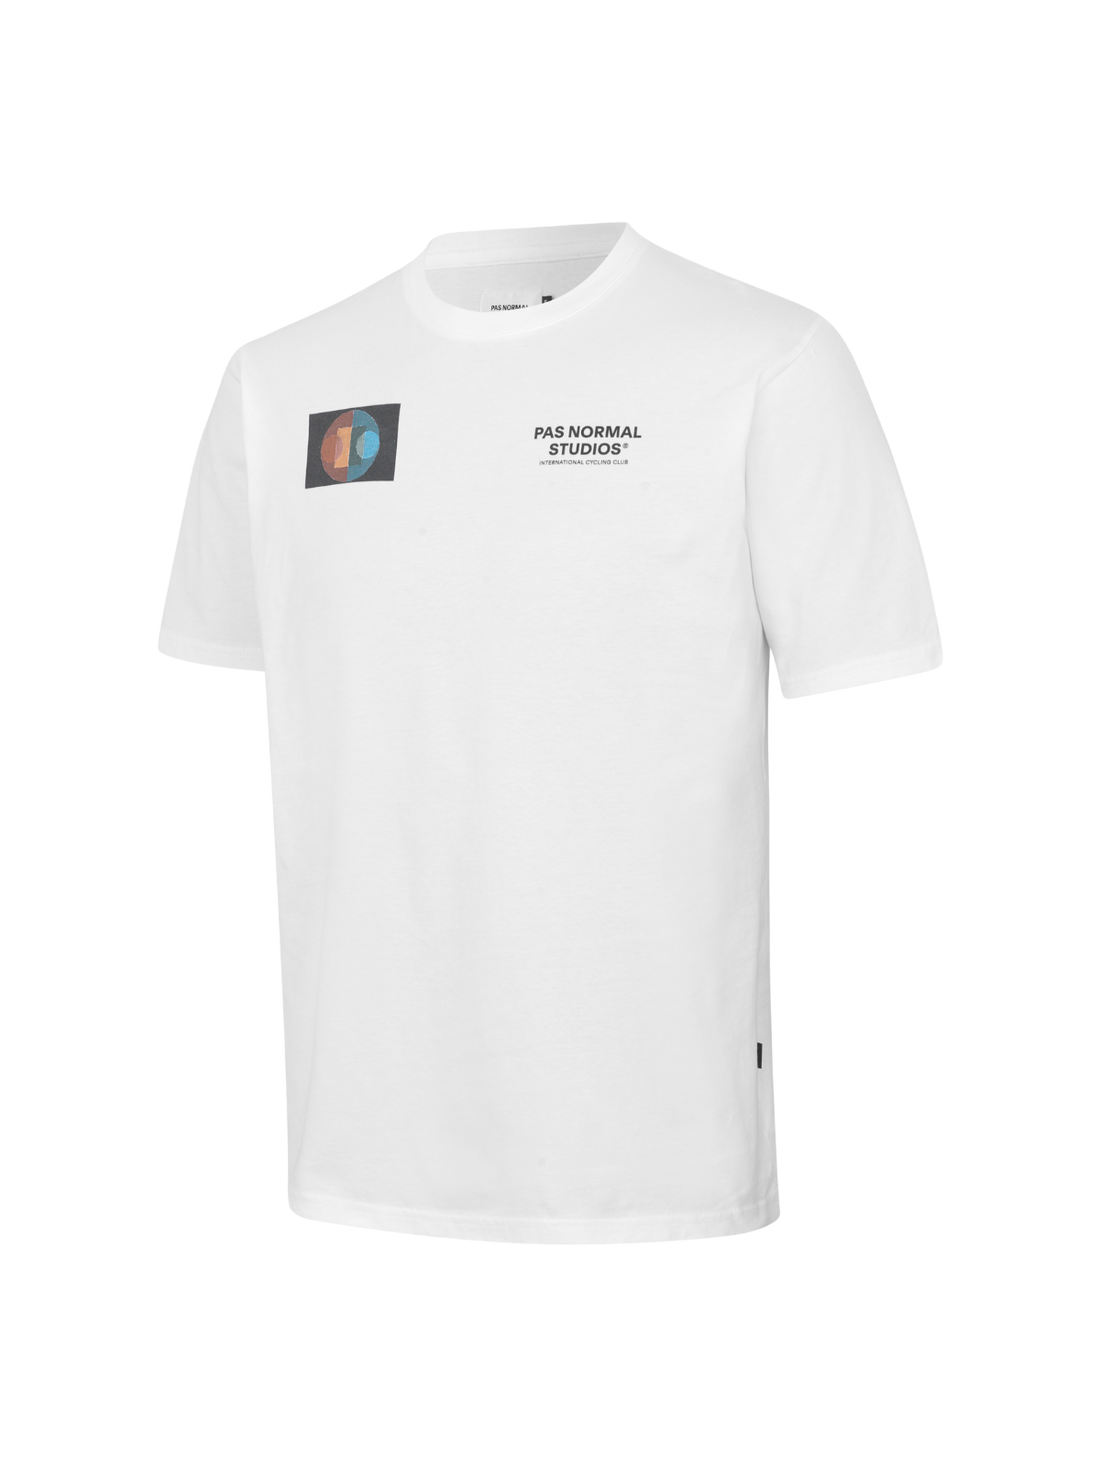 T.K.O. Off-Race T-shirt - White - Pas Normal Studios